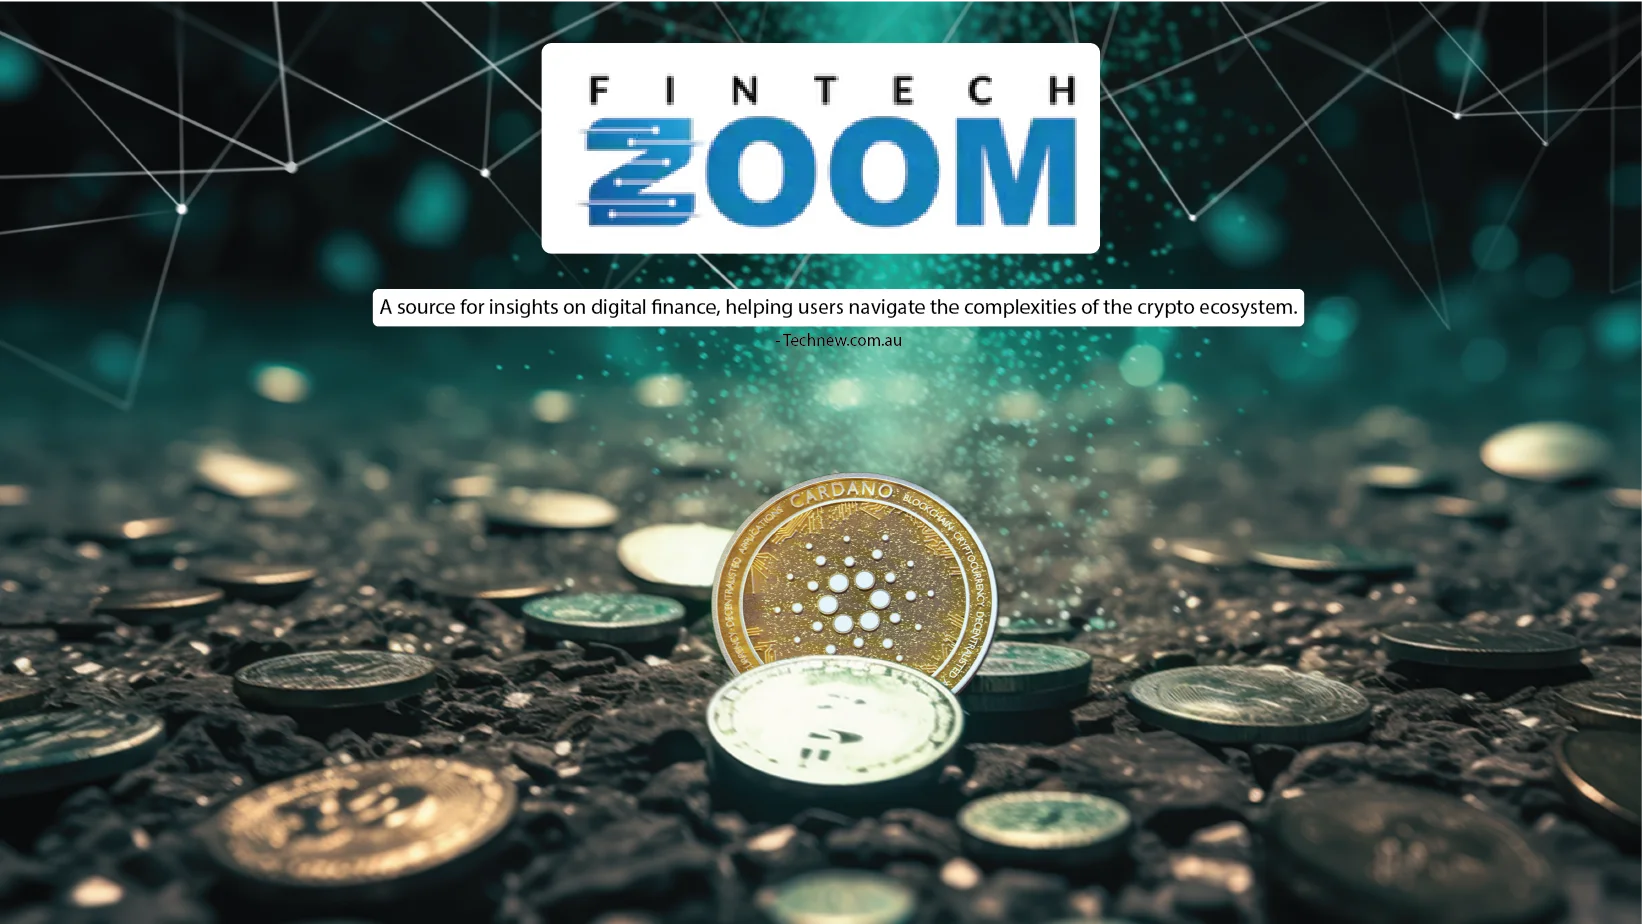 Money Fintechzoom: Revolutionize Your Finance Game